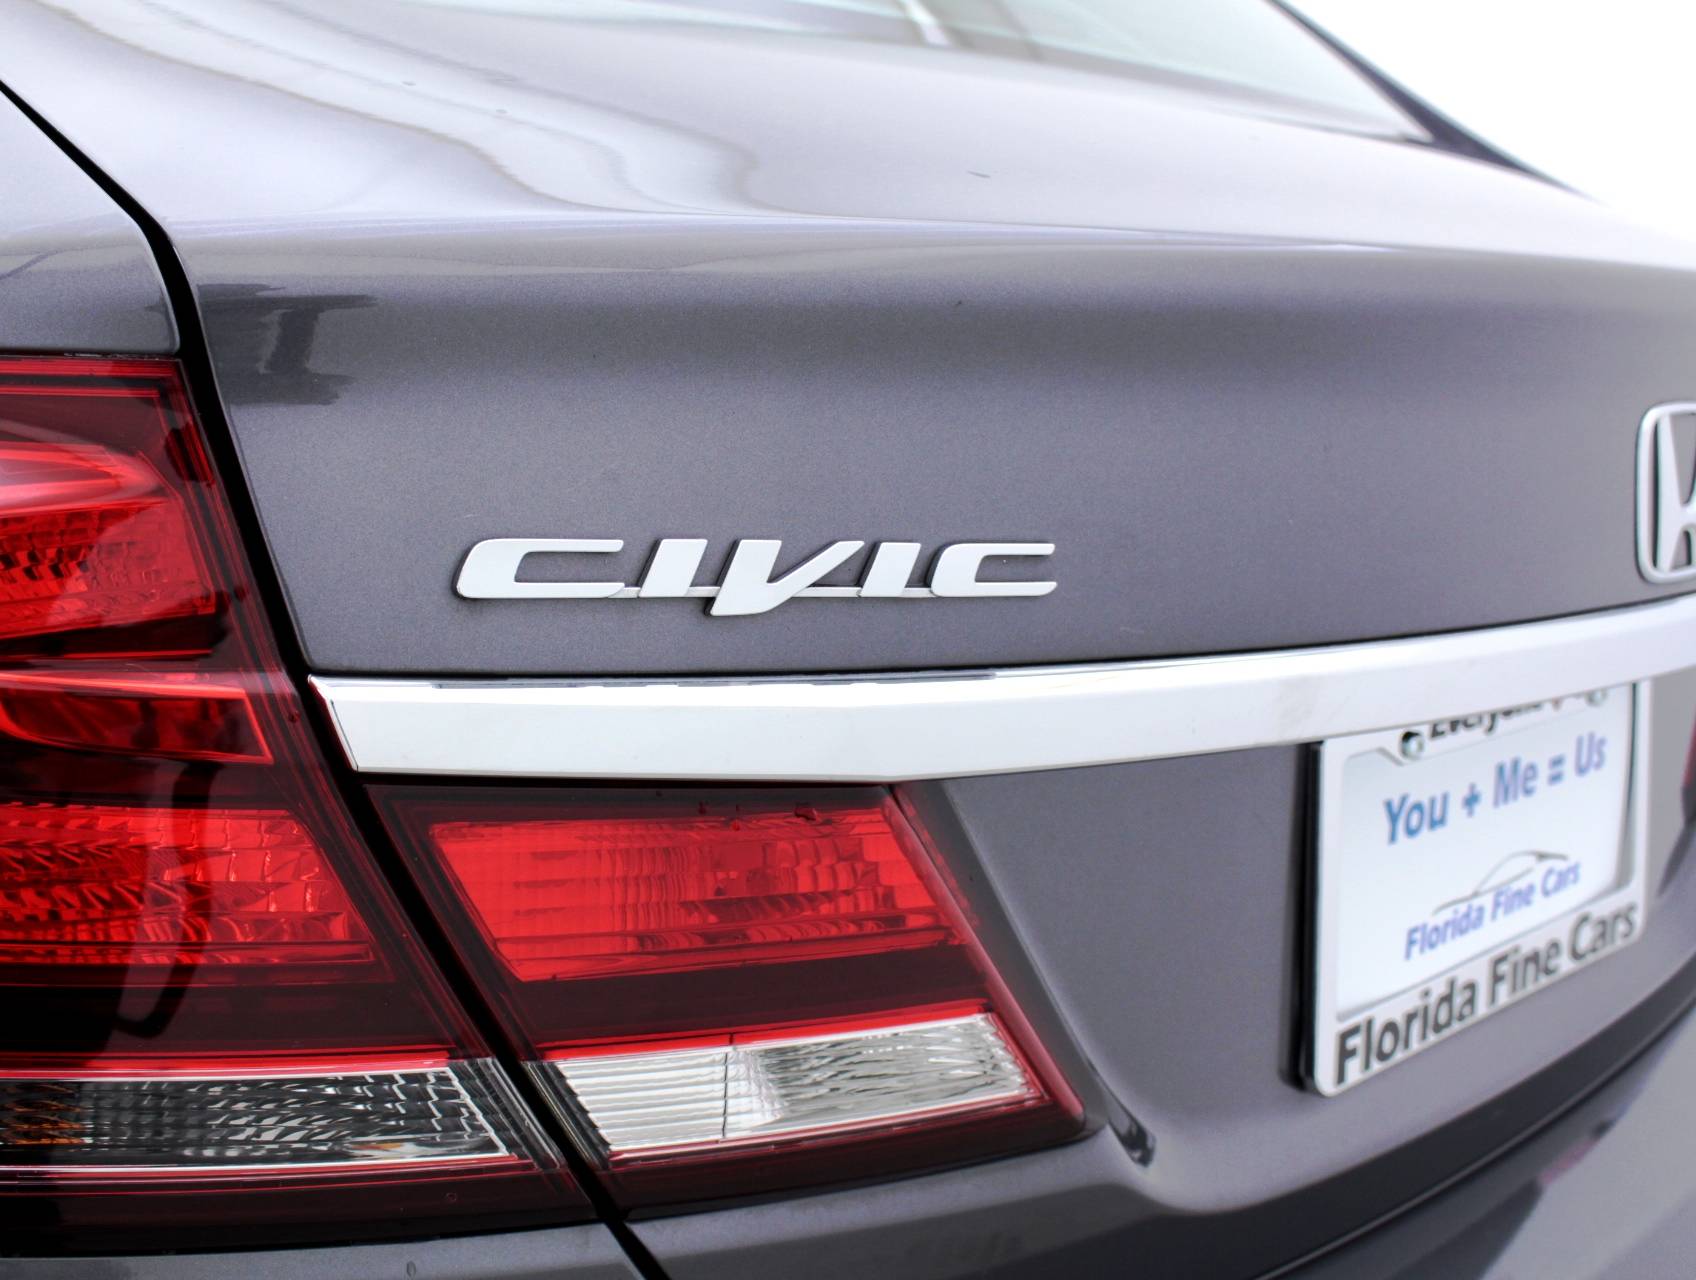 Florida Fine Cars - Used HONDA CIVIC 2014 MIAMI EX